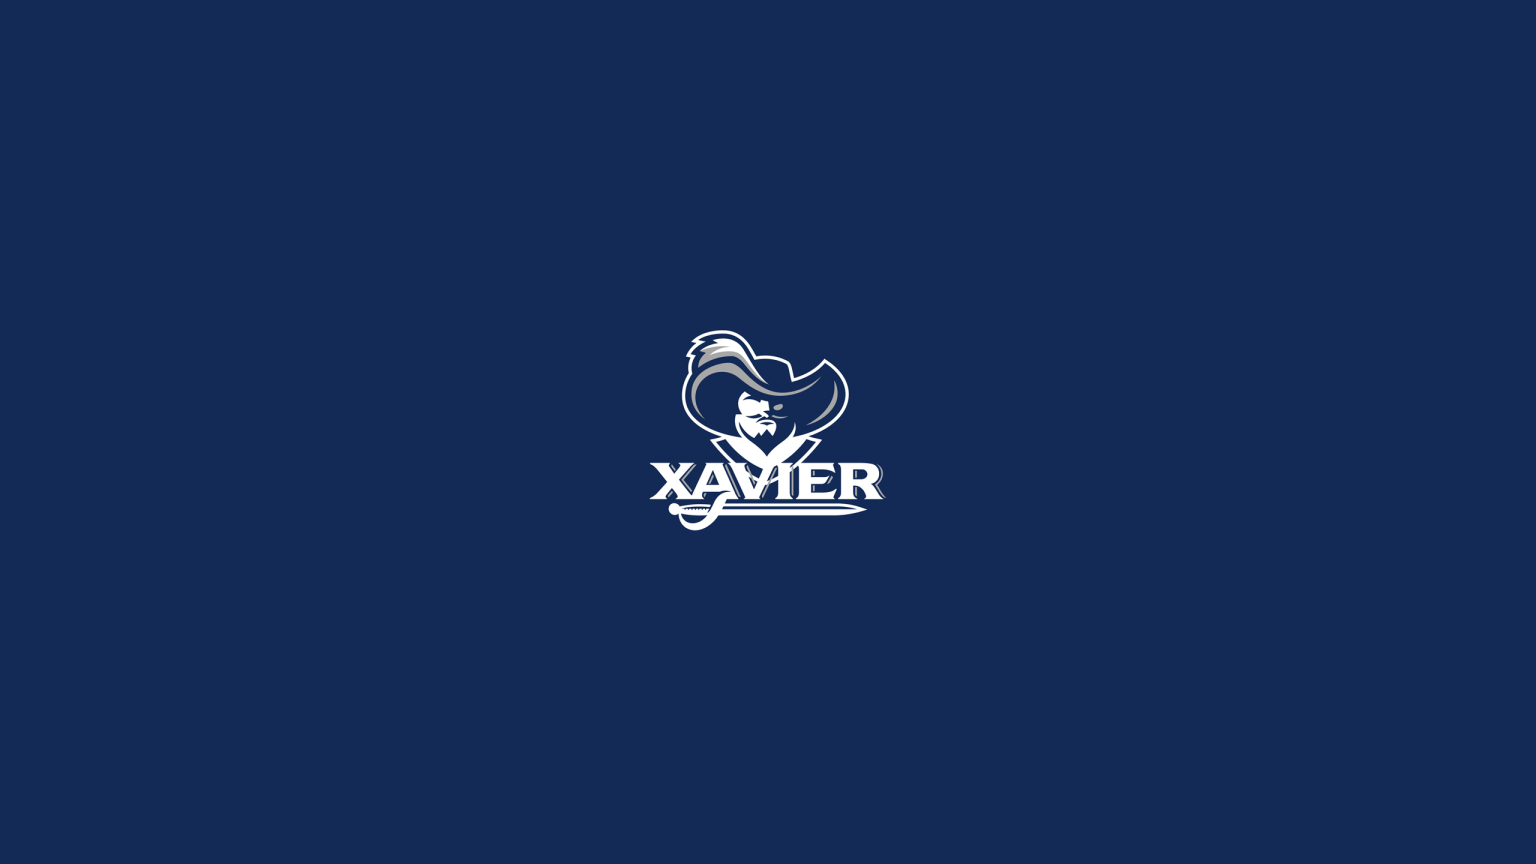 Xavier Musketeers Basketball - NCAAB - Square Bettor